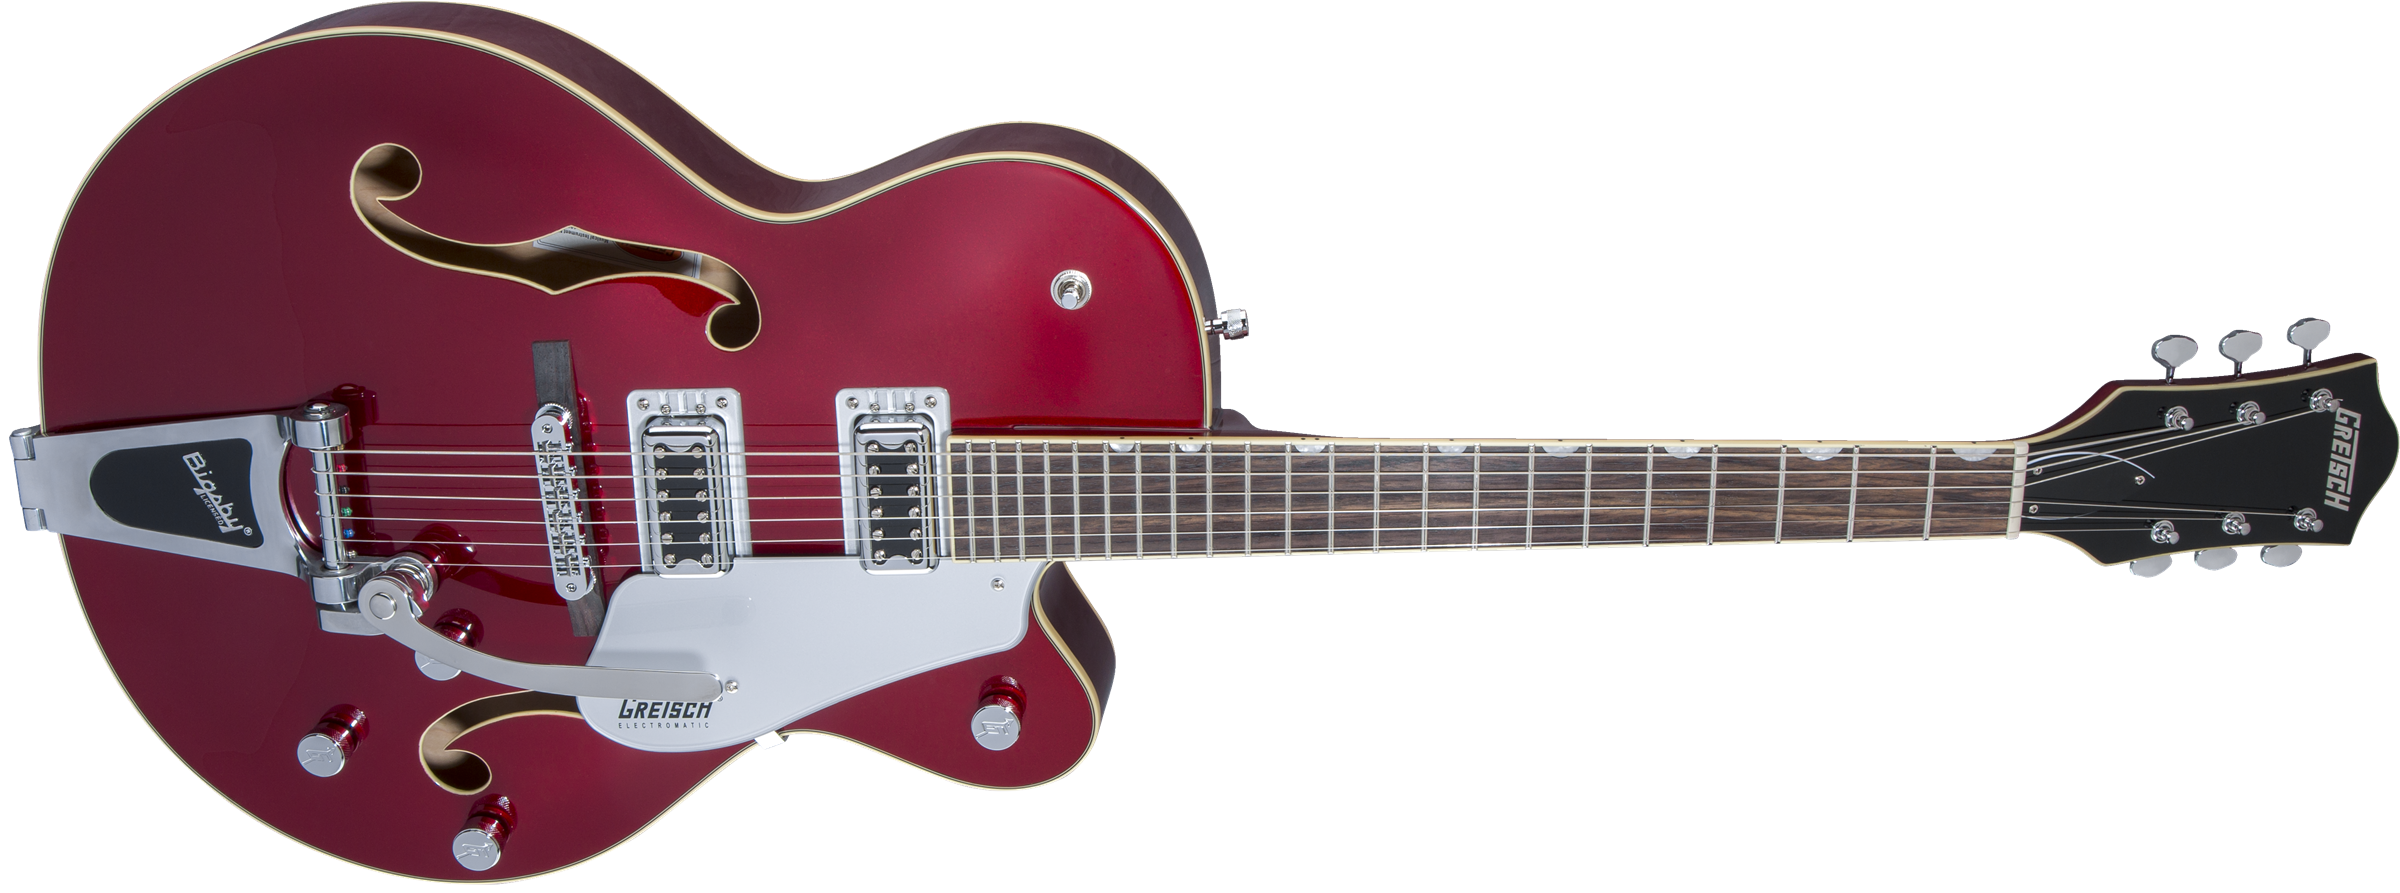 Gretsch G5420t Electromatic Hollow Body 2018 - Candy Apple Red - Semi hollow elektriche gitaar - Variation 2